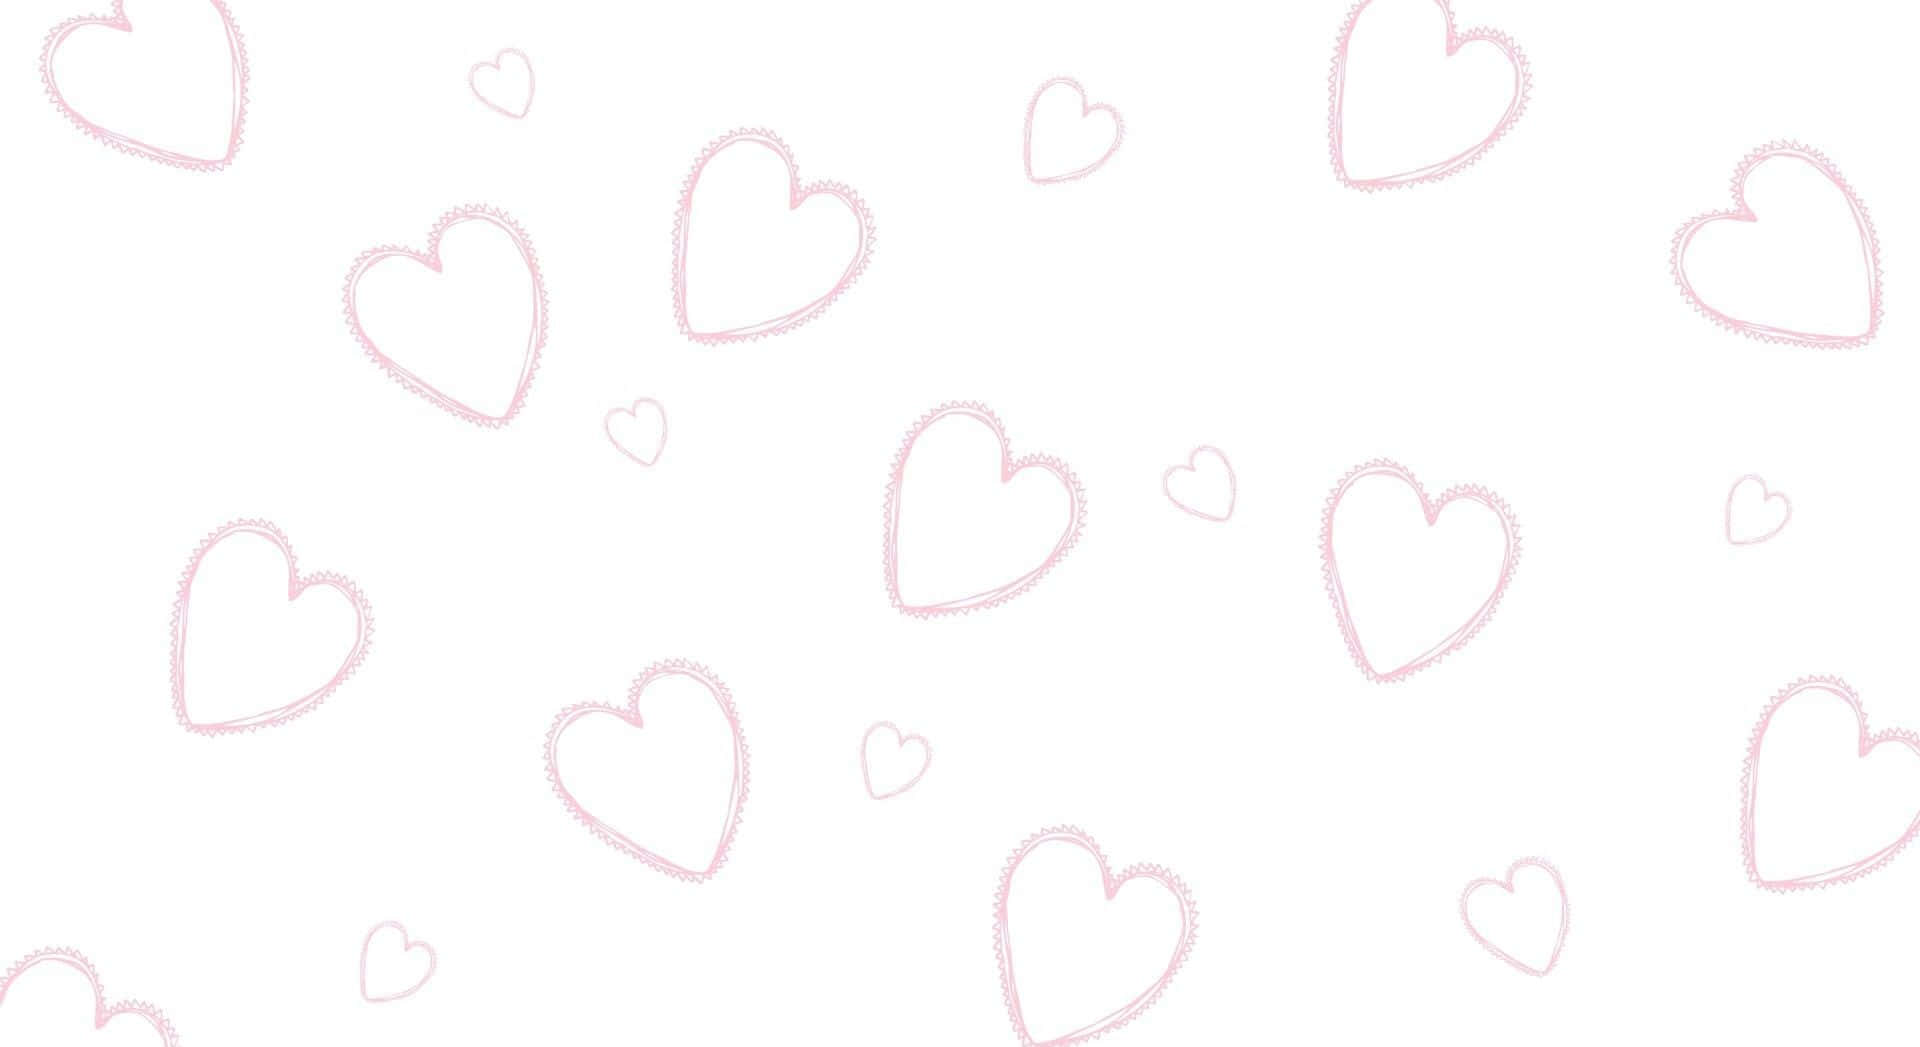 Heart Background Stock Illustrations RoyaltyFree Vector Graphics  Clip  Art  iStock  Heart Red heart background Love background